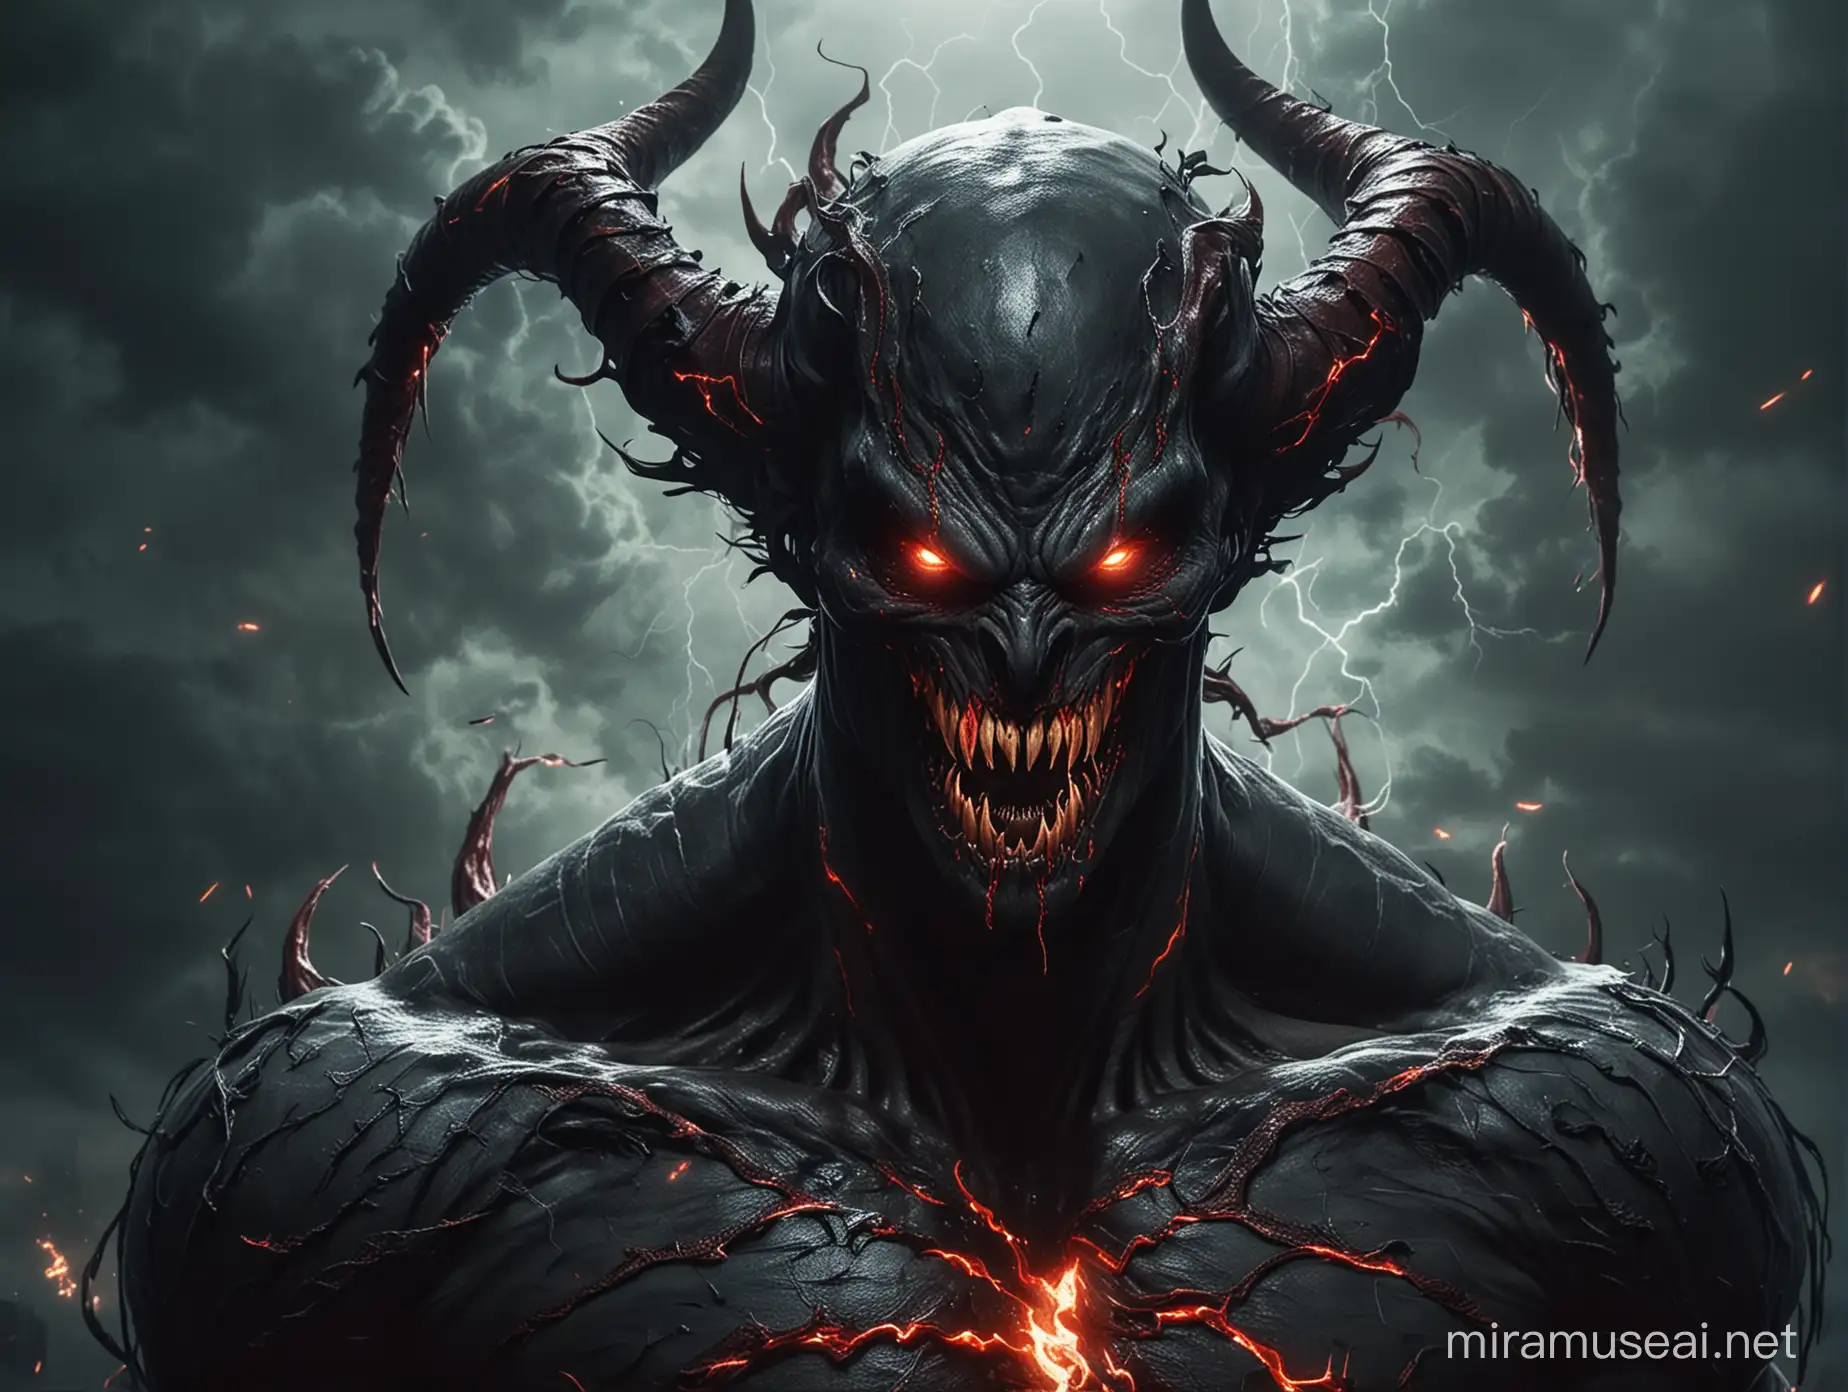 Malevolent Venomous Entity Emerges with Dark Red Lightning